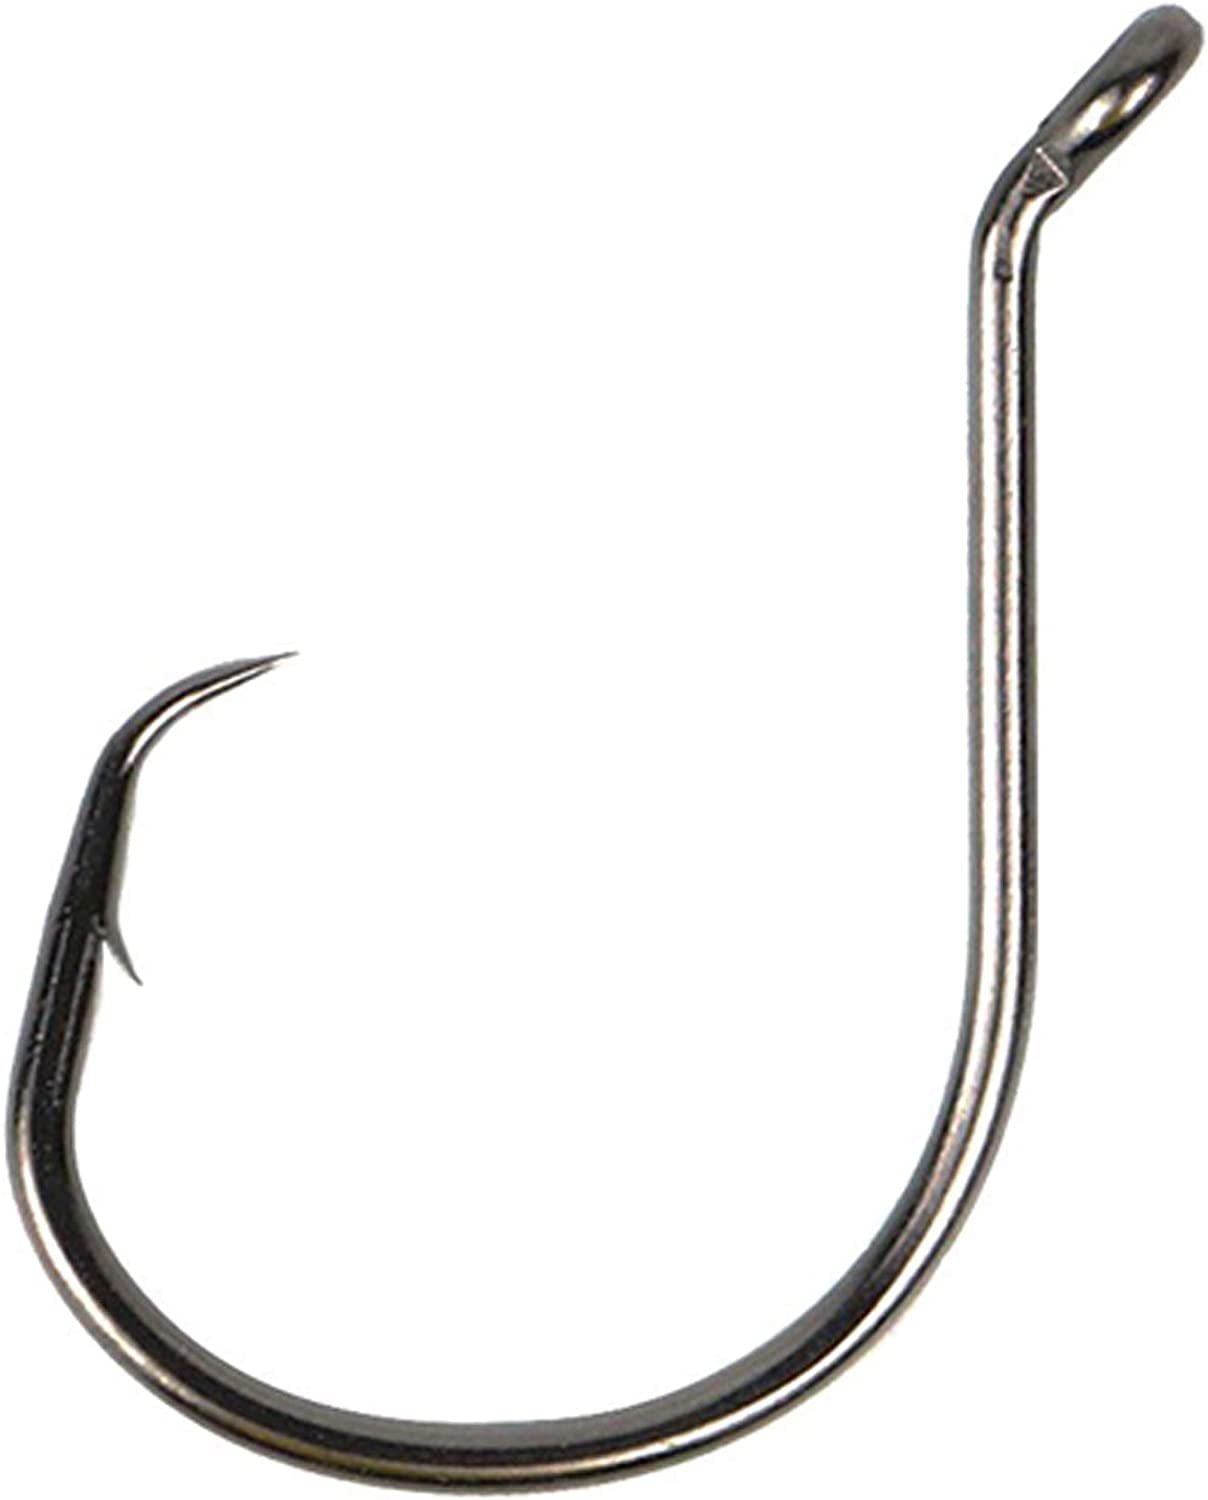 50pcs Twistlock Fishing Hooks, Worm Hooks with Centering Pin